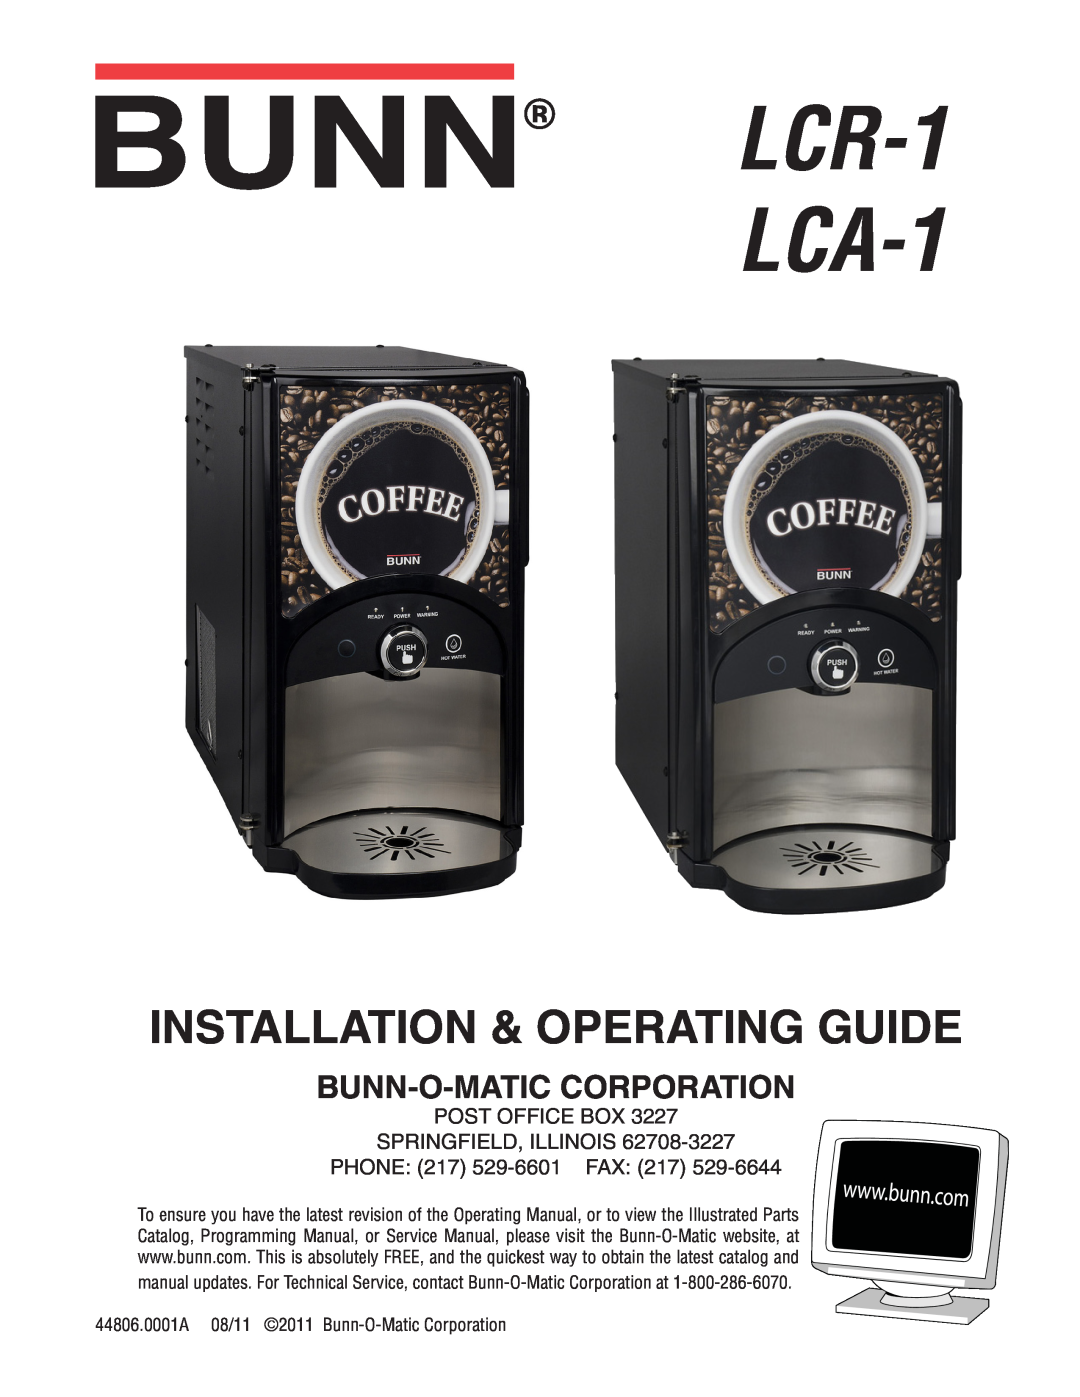 Bunn service manual LCR-1 LCA-1, Installation & Operating Guide, Bunn-O-Matic Corporation 